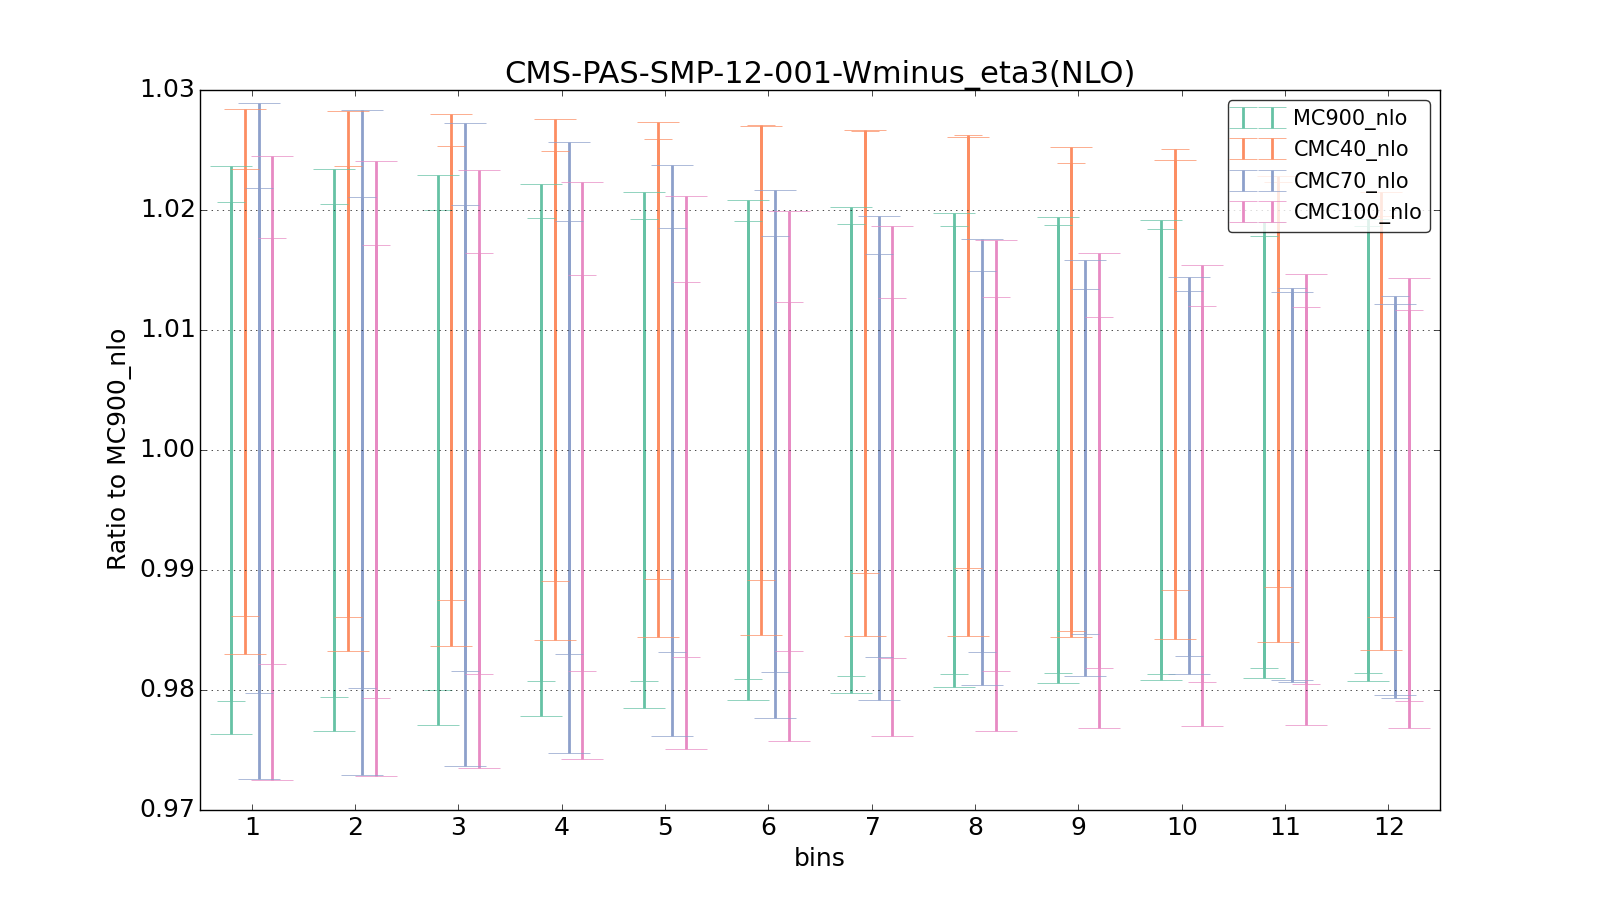 figure plots/CMCpheno/group_1_ciplot_CMS-PAS-SMP-12-001-Wminus_eta3(NLO).png